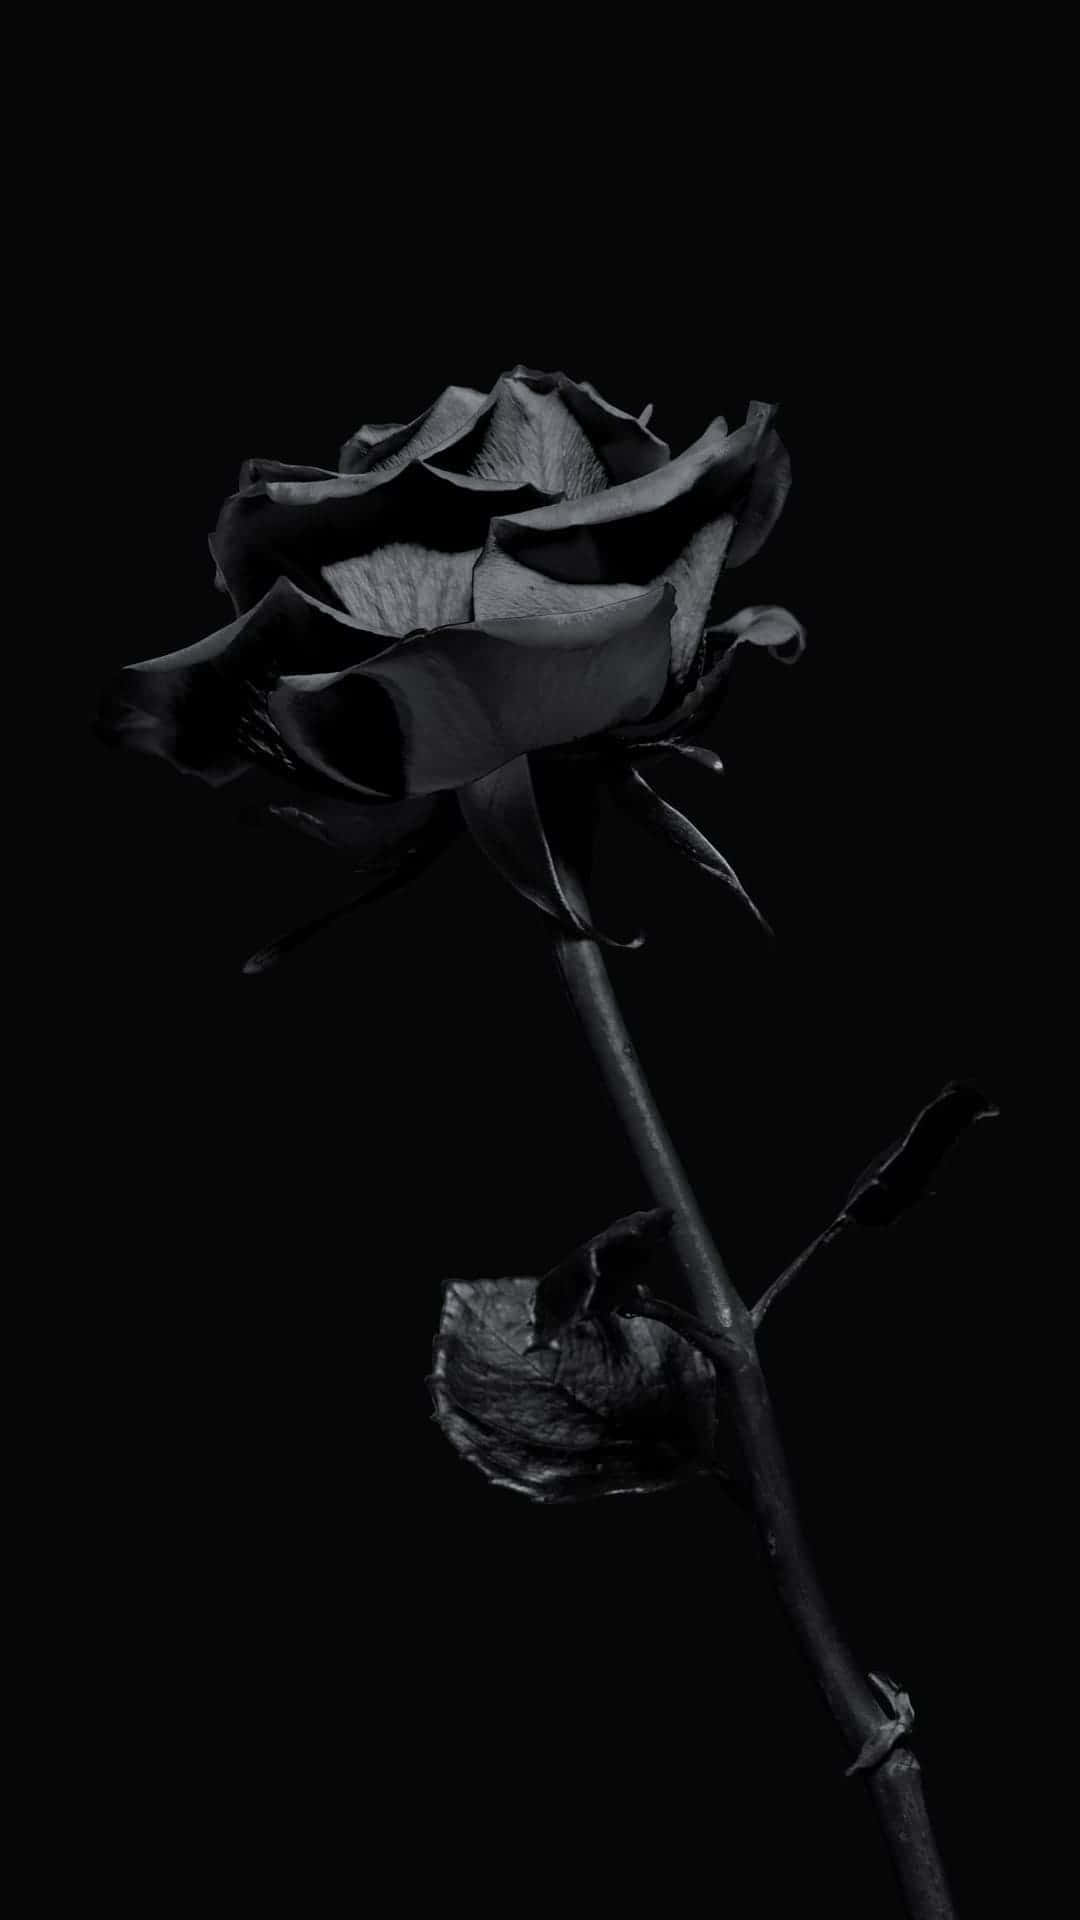 Caption: Elegance In Darkness: The Black Rose